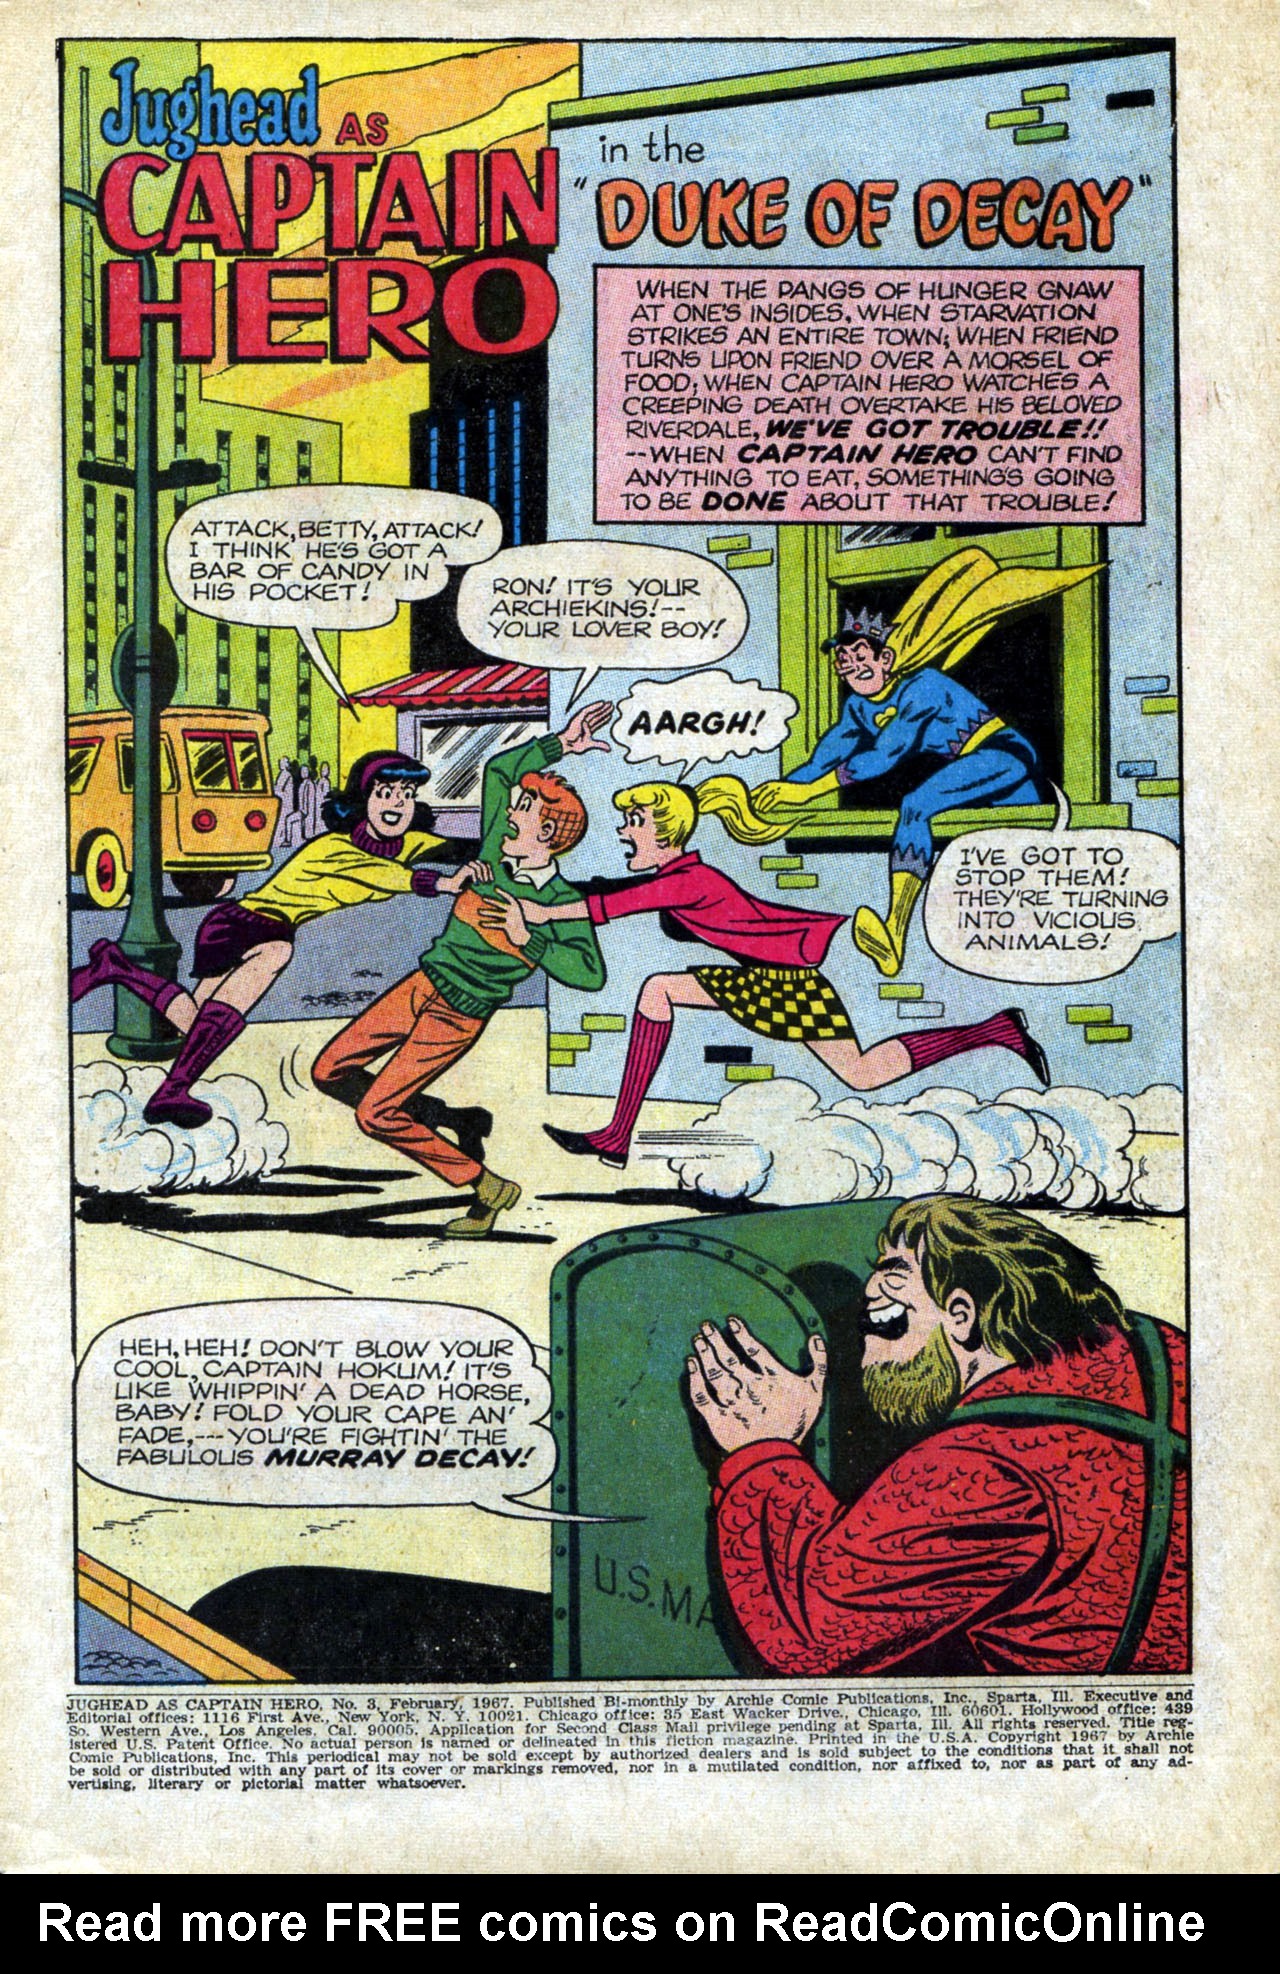 Read online Jughead As Captain Hero comic -  Issue #3 - 3